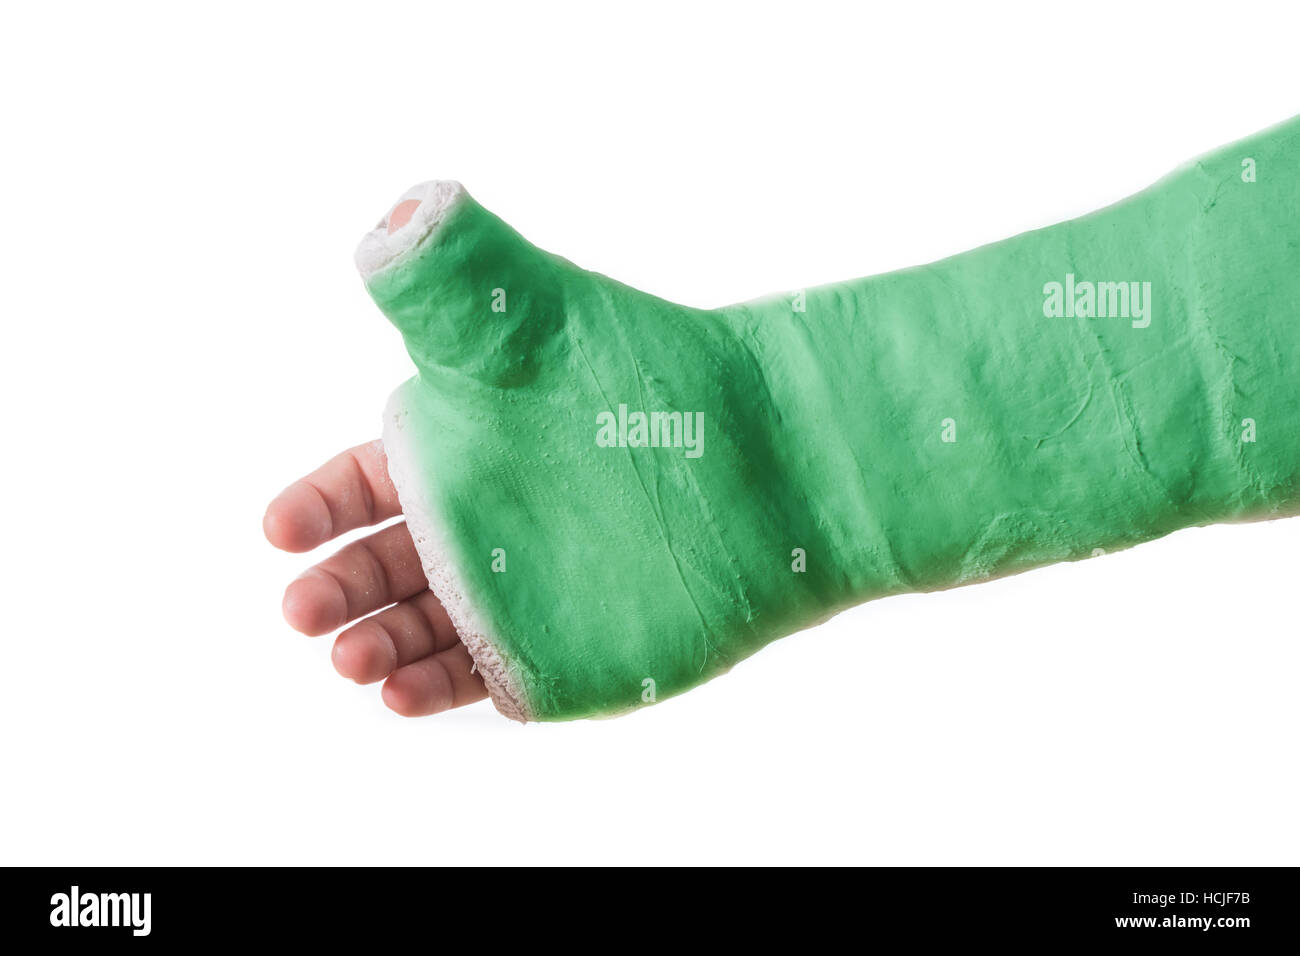 green arm cast